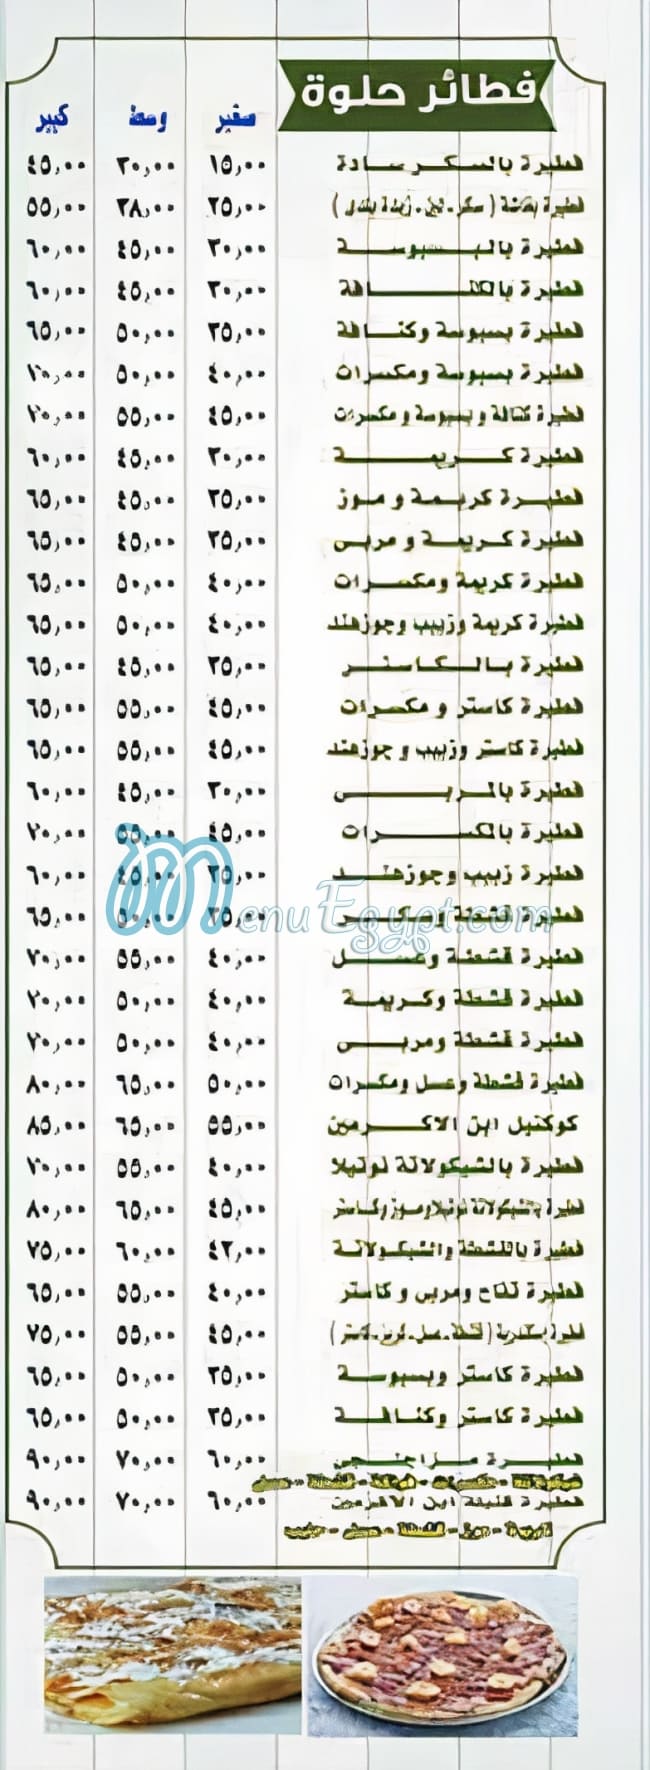 Fatatry Ibn El Akramin online menu